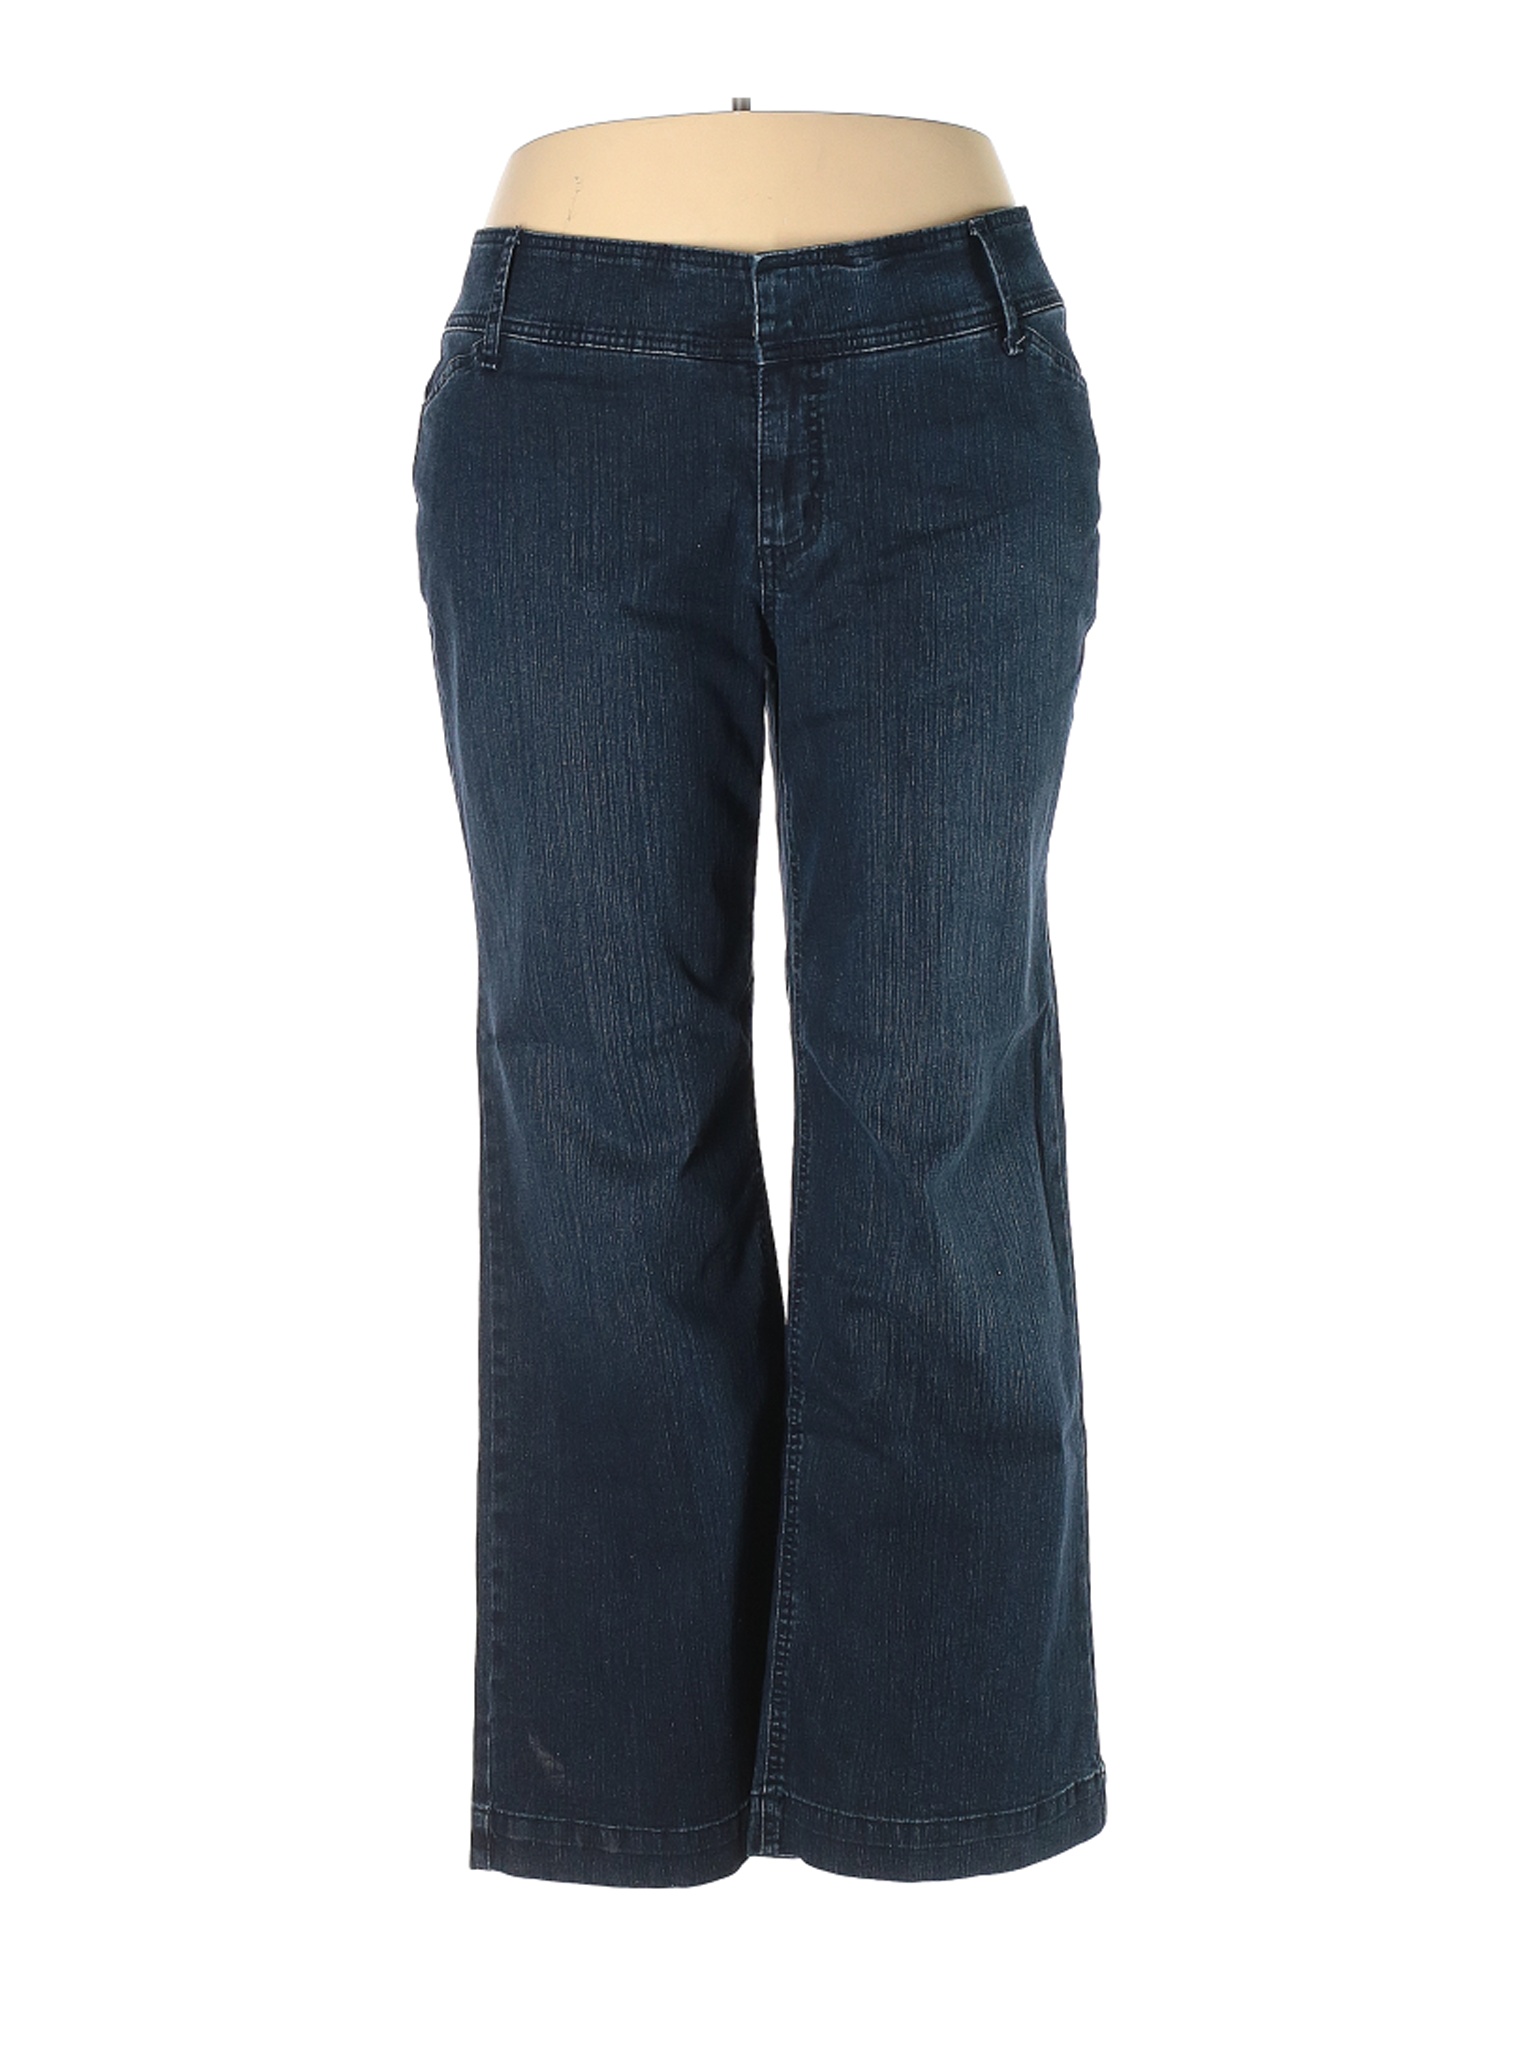 SONOMA life + style Women Blue Jeans 20 Plus | eBay